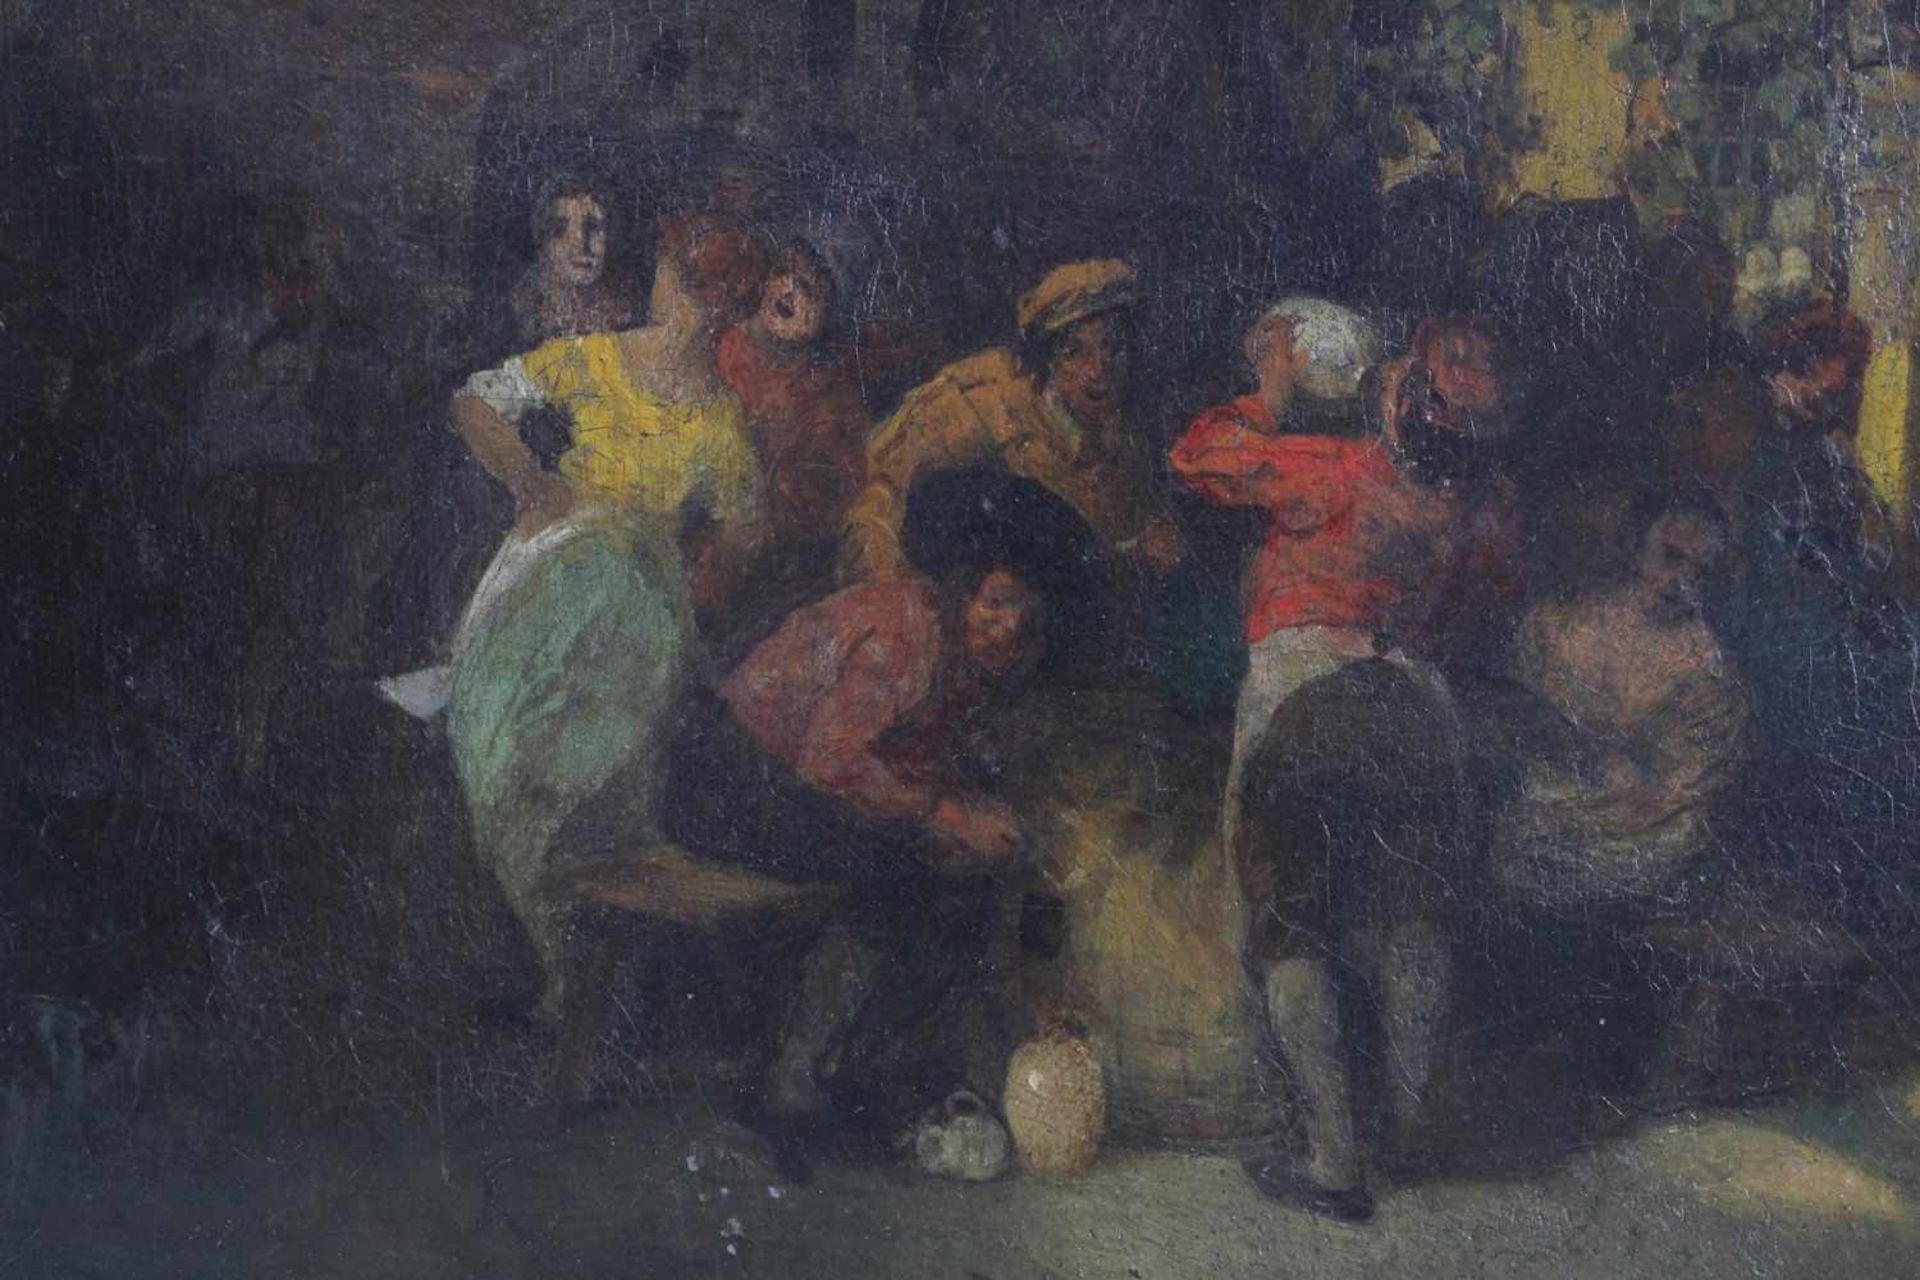 Unbekannter Künstler aus dem 18. Jh., TrinkgelageÖl auf Leinwand, dubliert, gerahmt, ca. 43 x 55 - Image 2 of 4